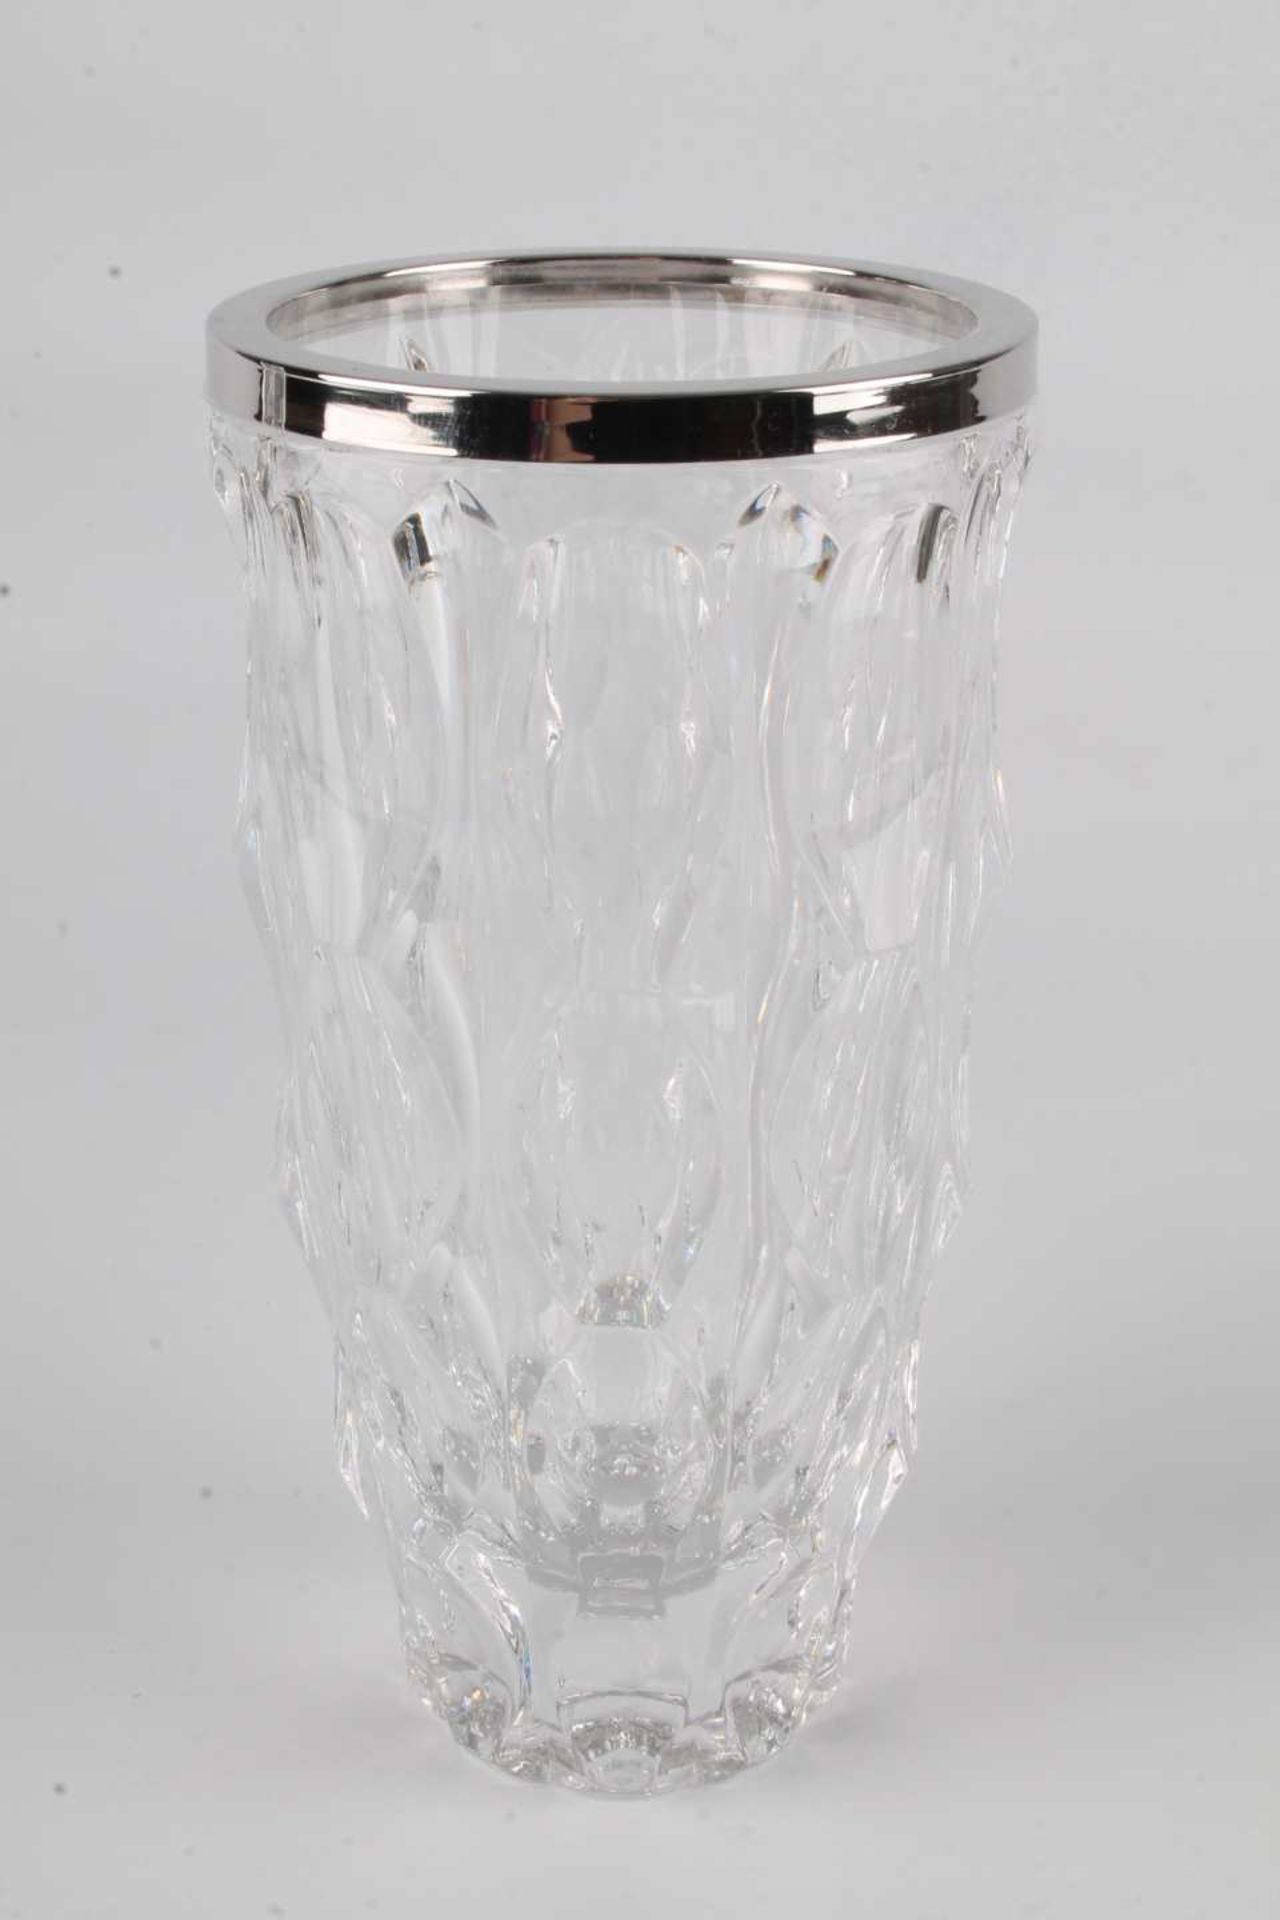 3 Kristallvasen mit Silbermontierung, 3 crystal vases with silver mounting, - Image 4 of 8